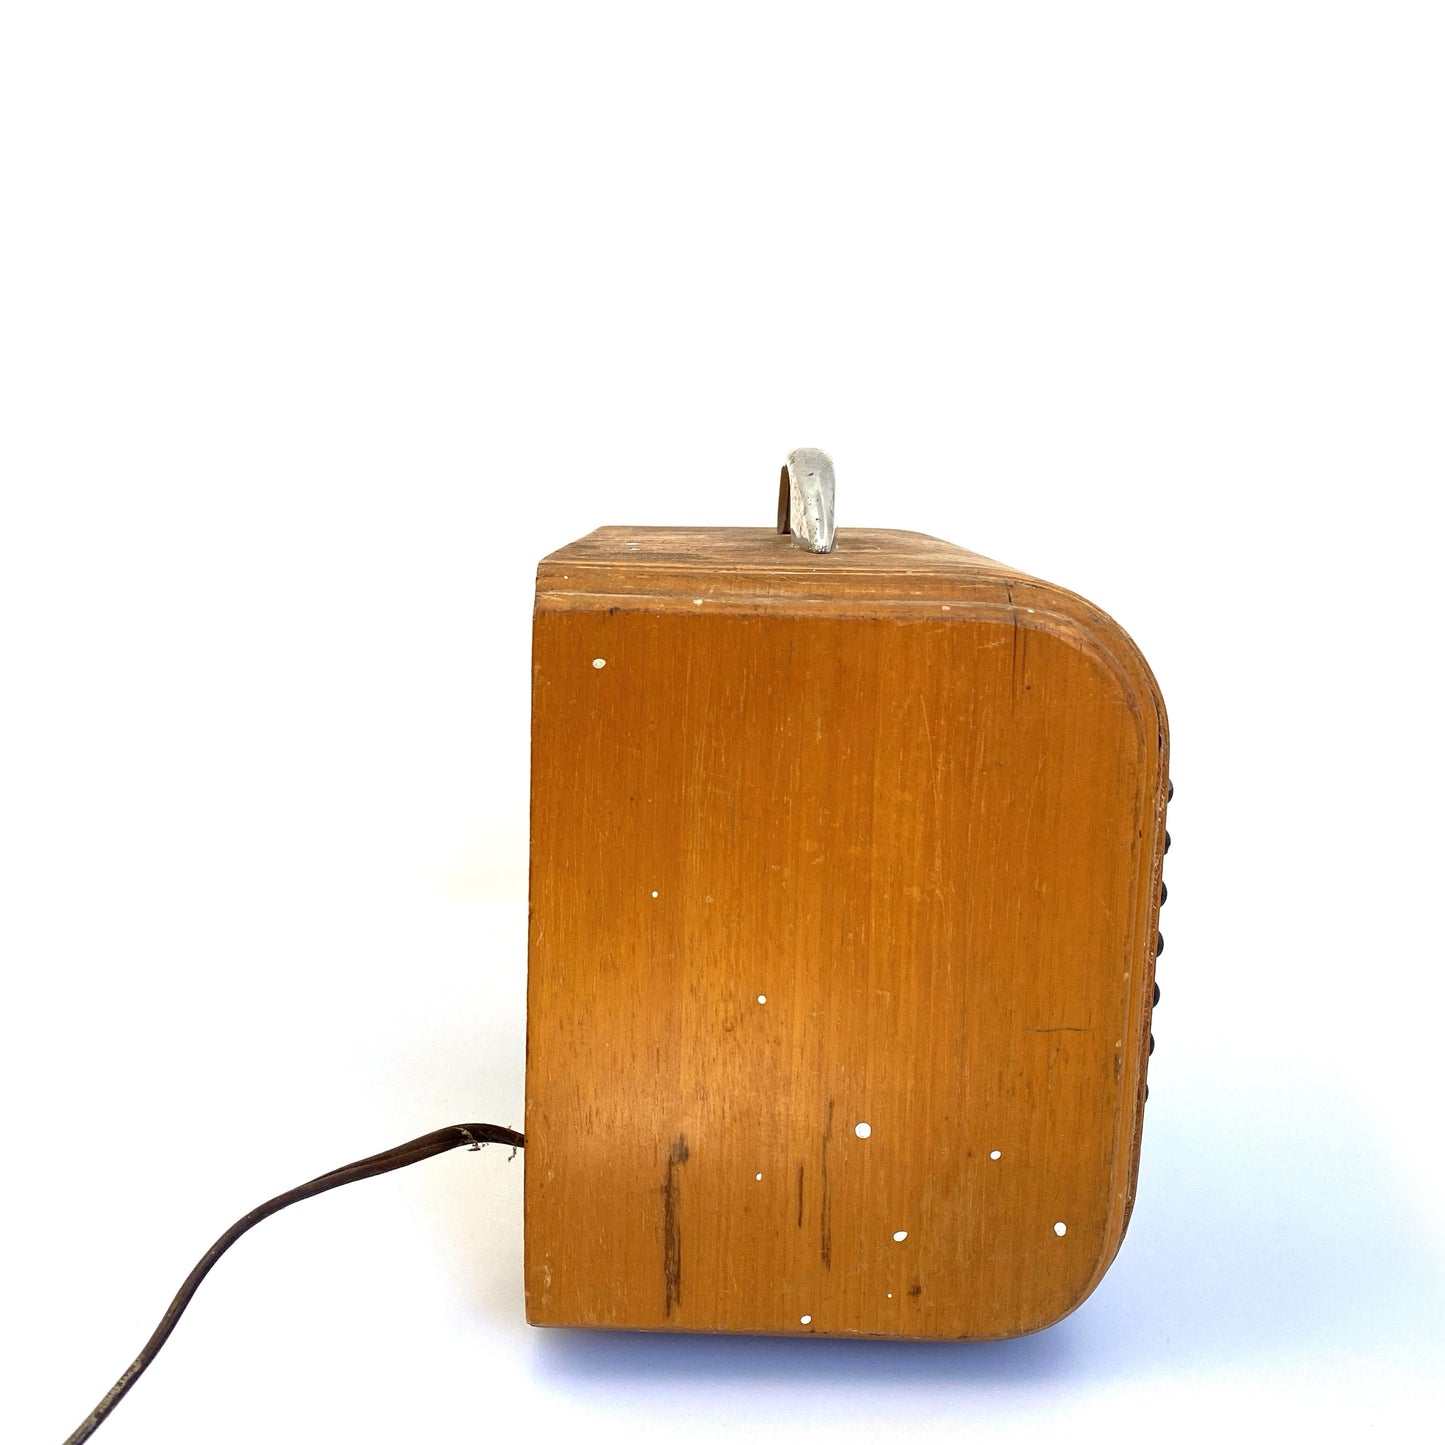 Vintage General Radio Model 2A5 Tabletop Radio (1947) Post-WW2 Tuner